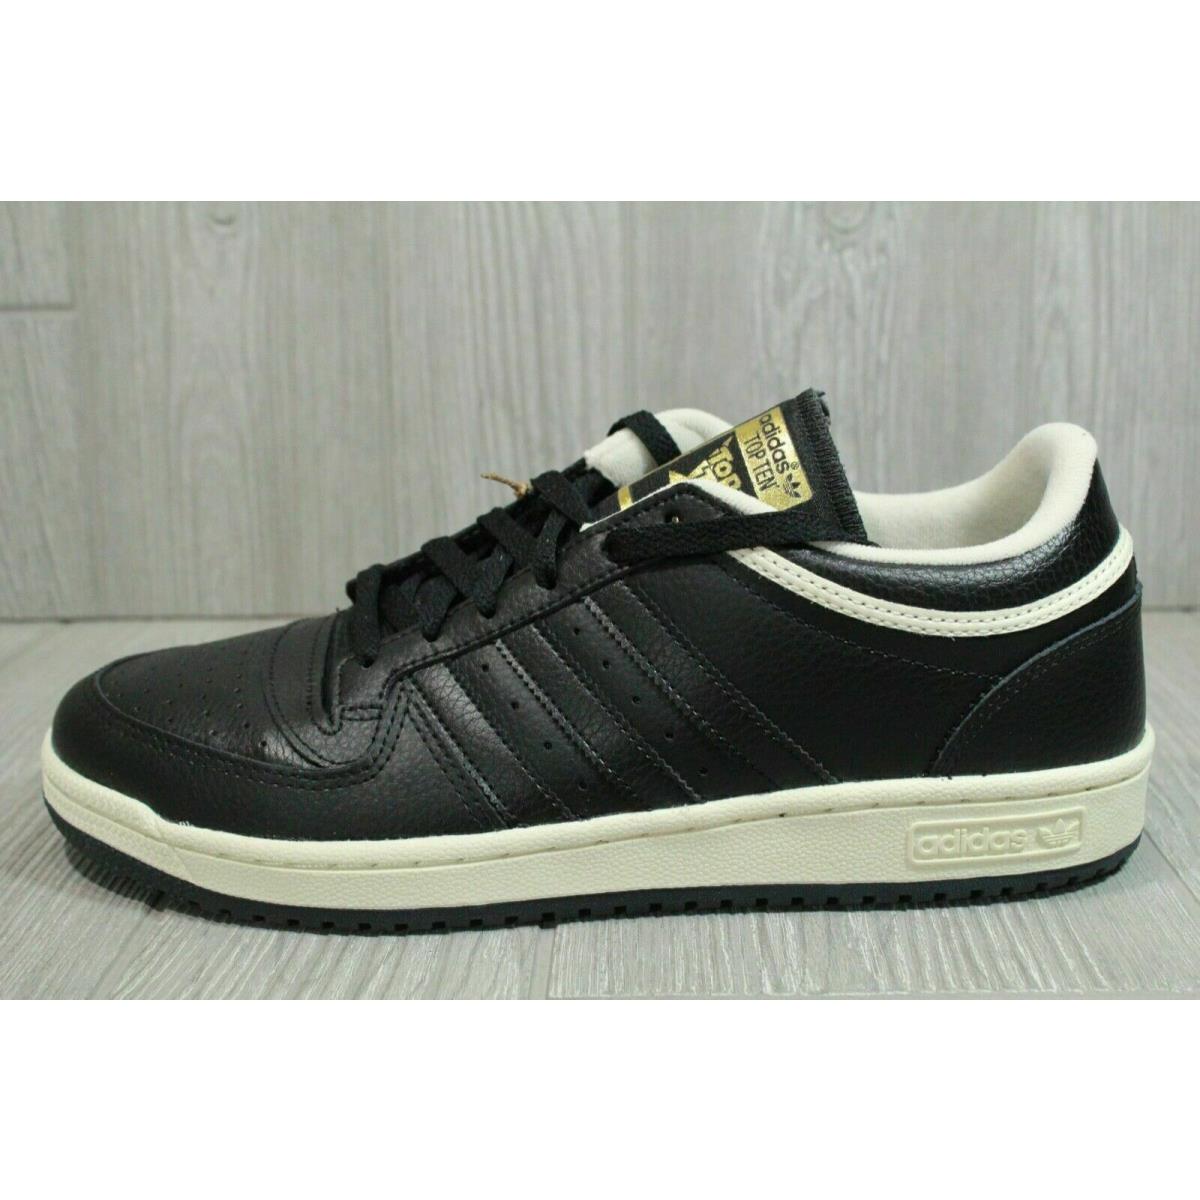 Adidas shoes Ten - Black 1